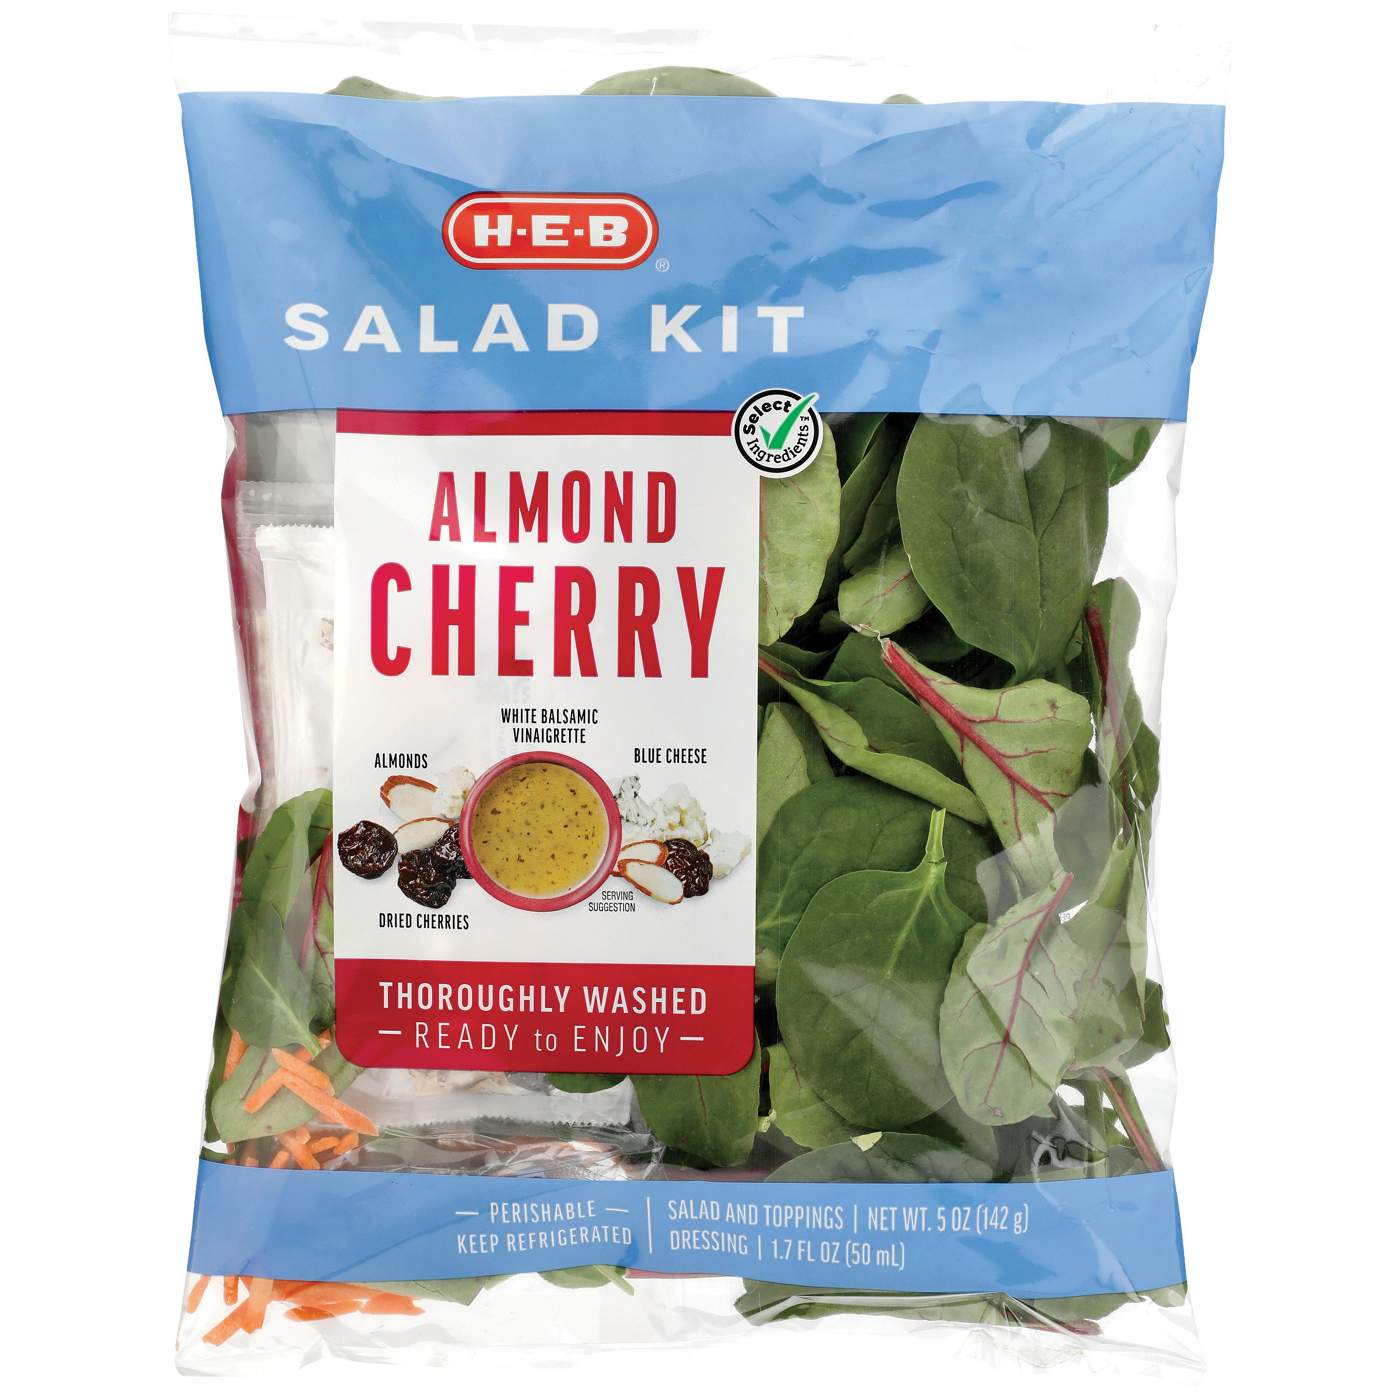 H-E-B Salad Kit - Almond Cherry; image 1 of 4